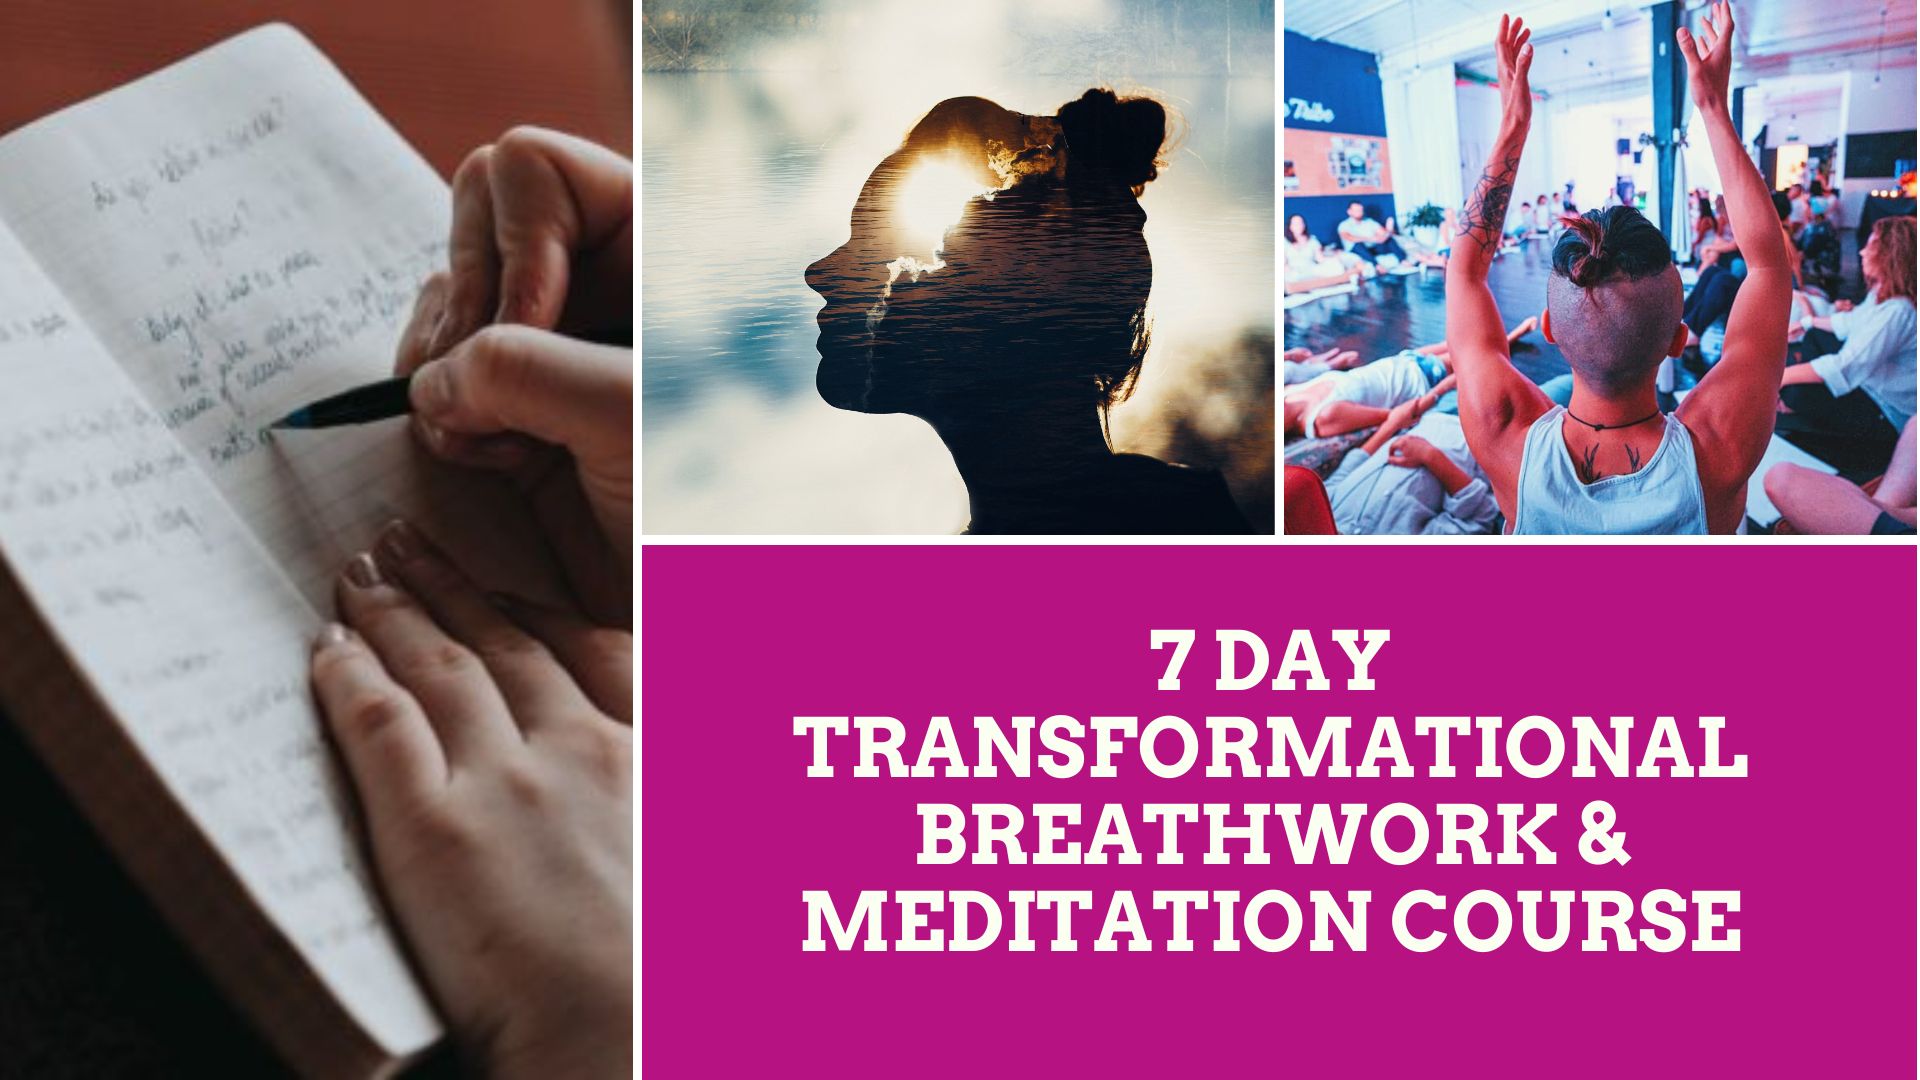 7 Day Transformational Breathwork & Meditation Course